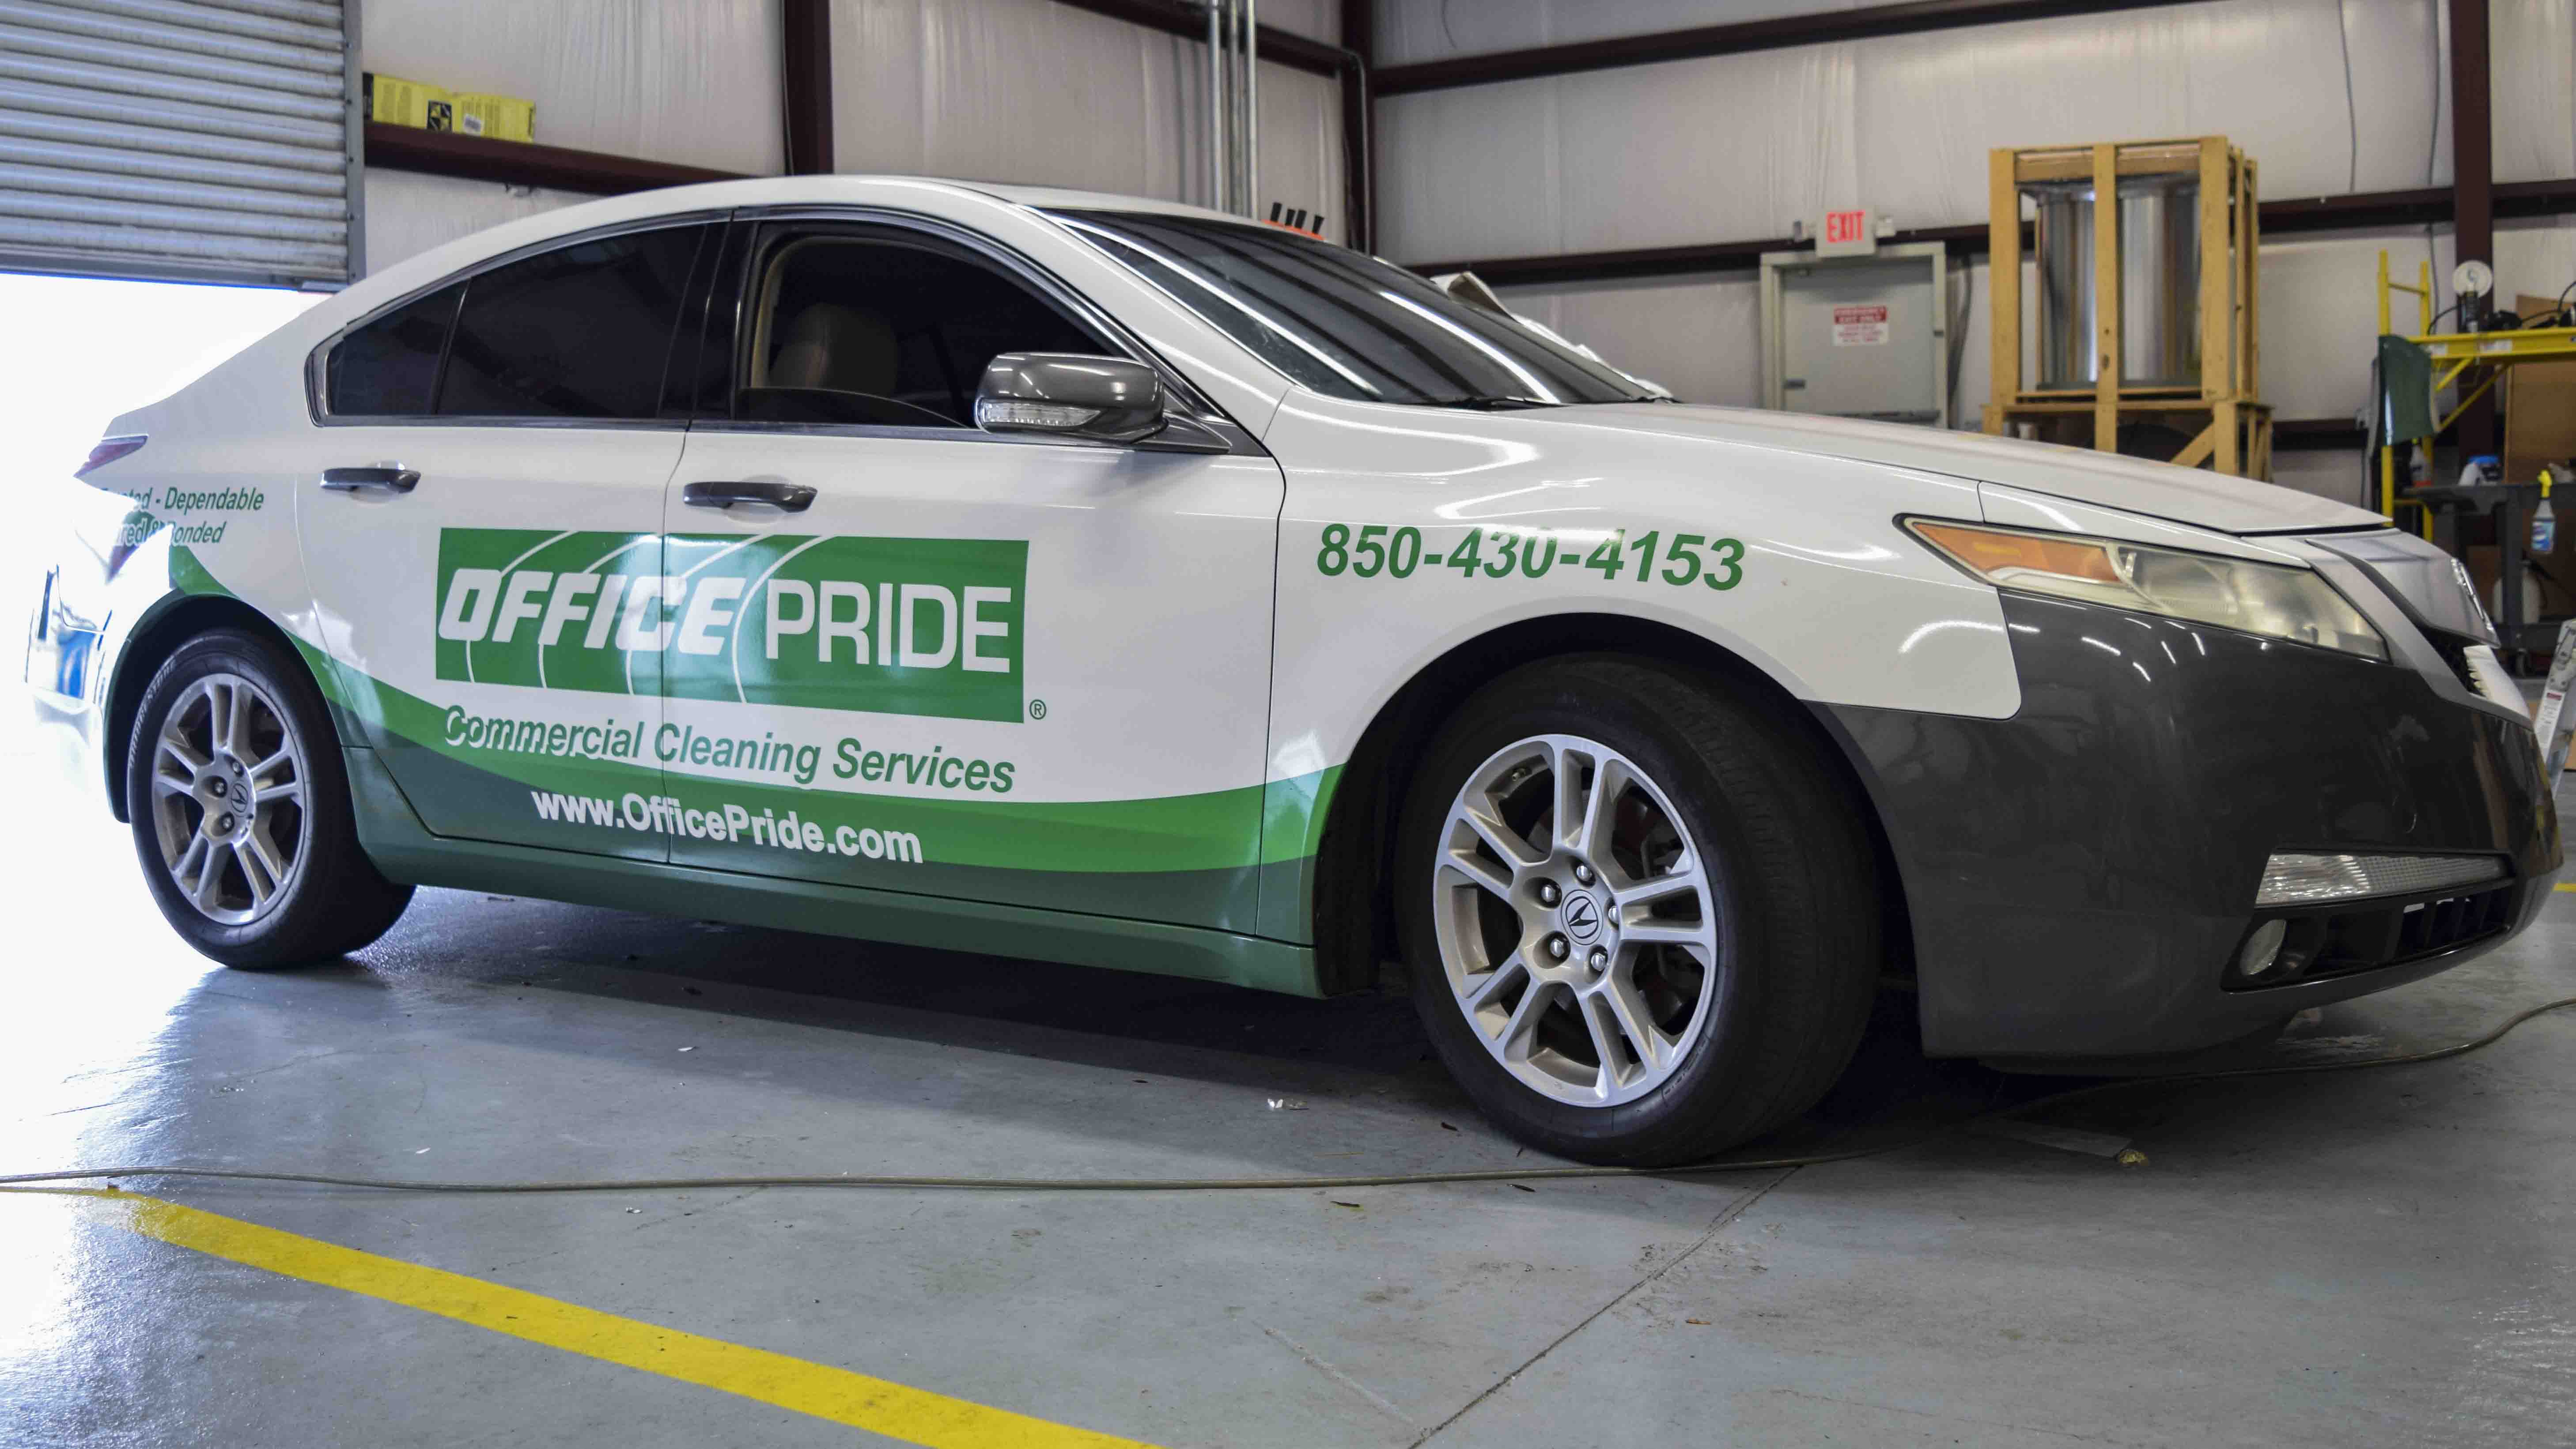 Pensacola Sign Car Wraps - Vehicle Wrap for Office Pride